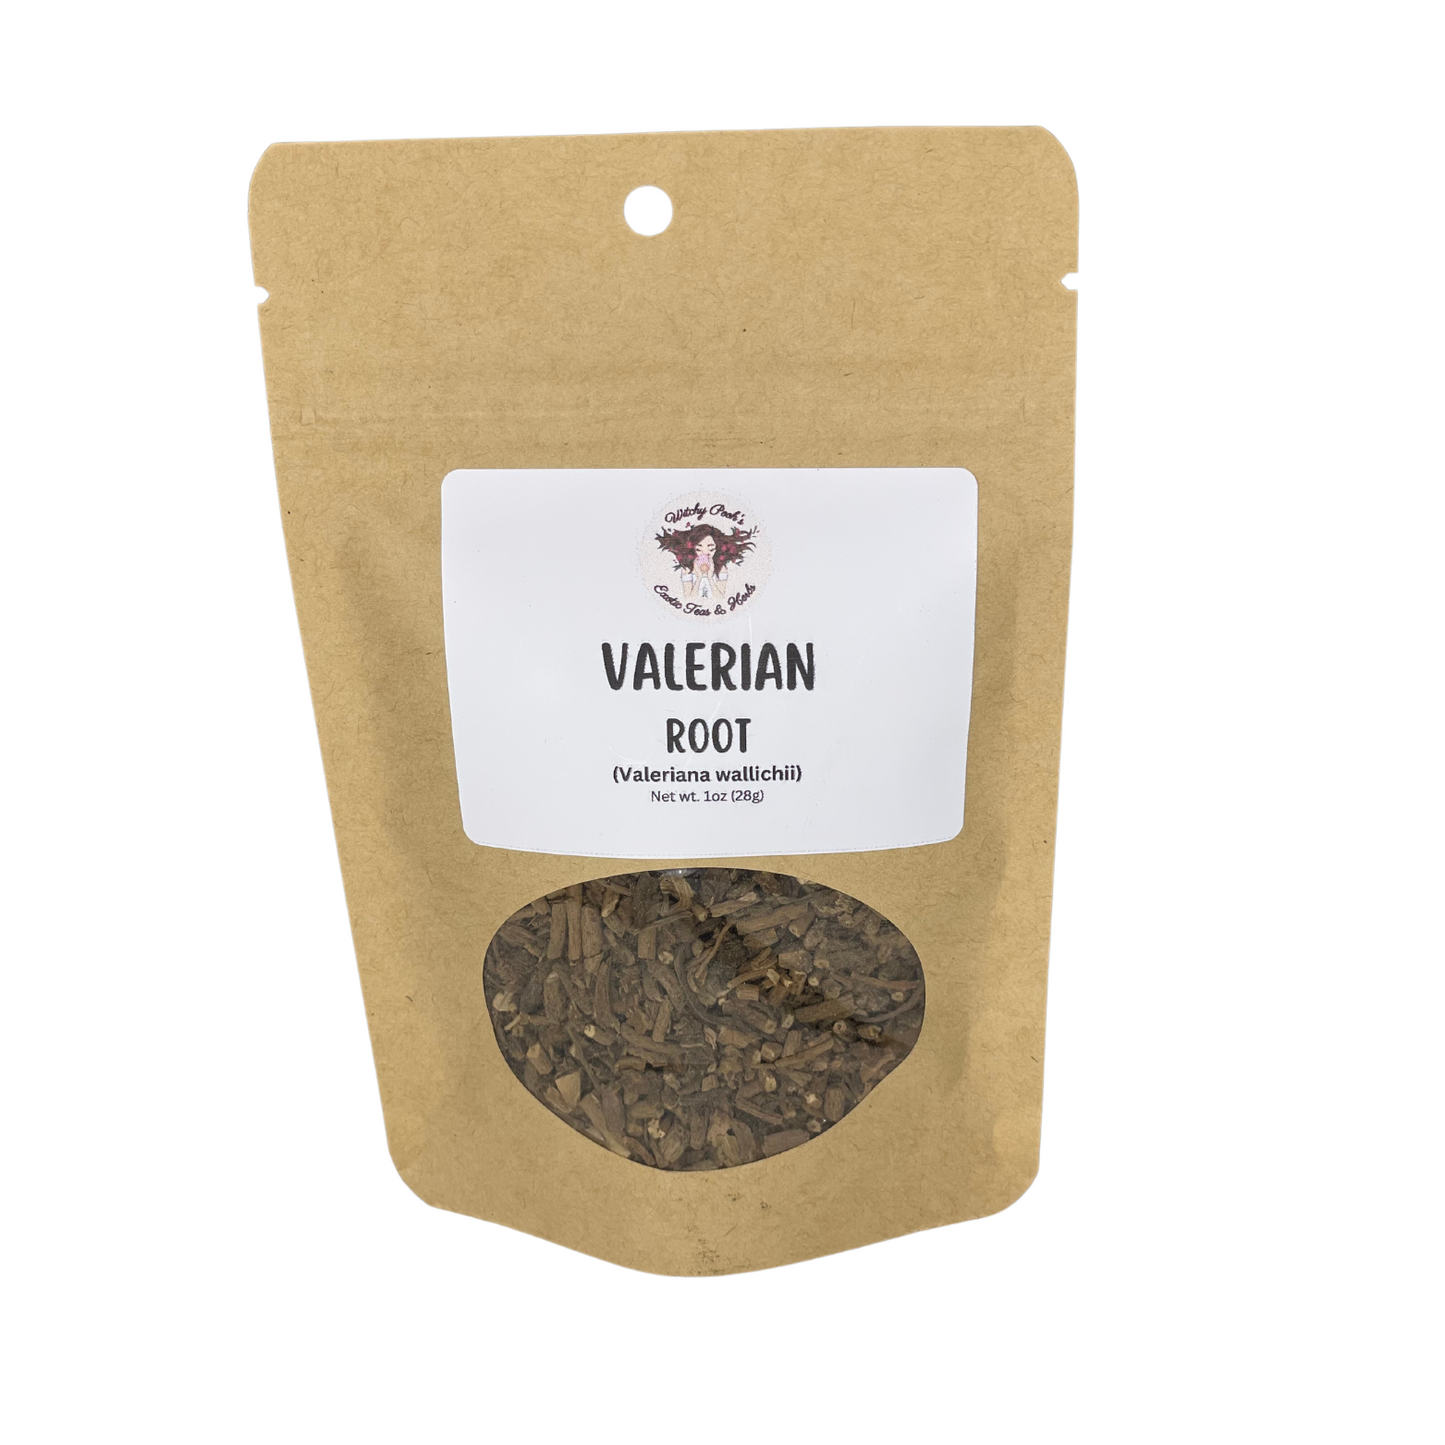 Valerian Root (Valeriana wallichii)